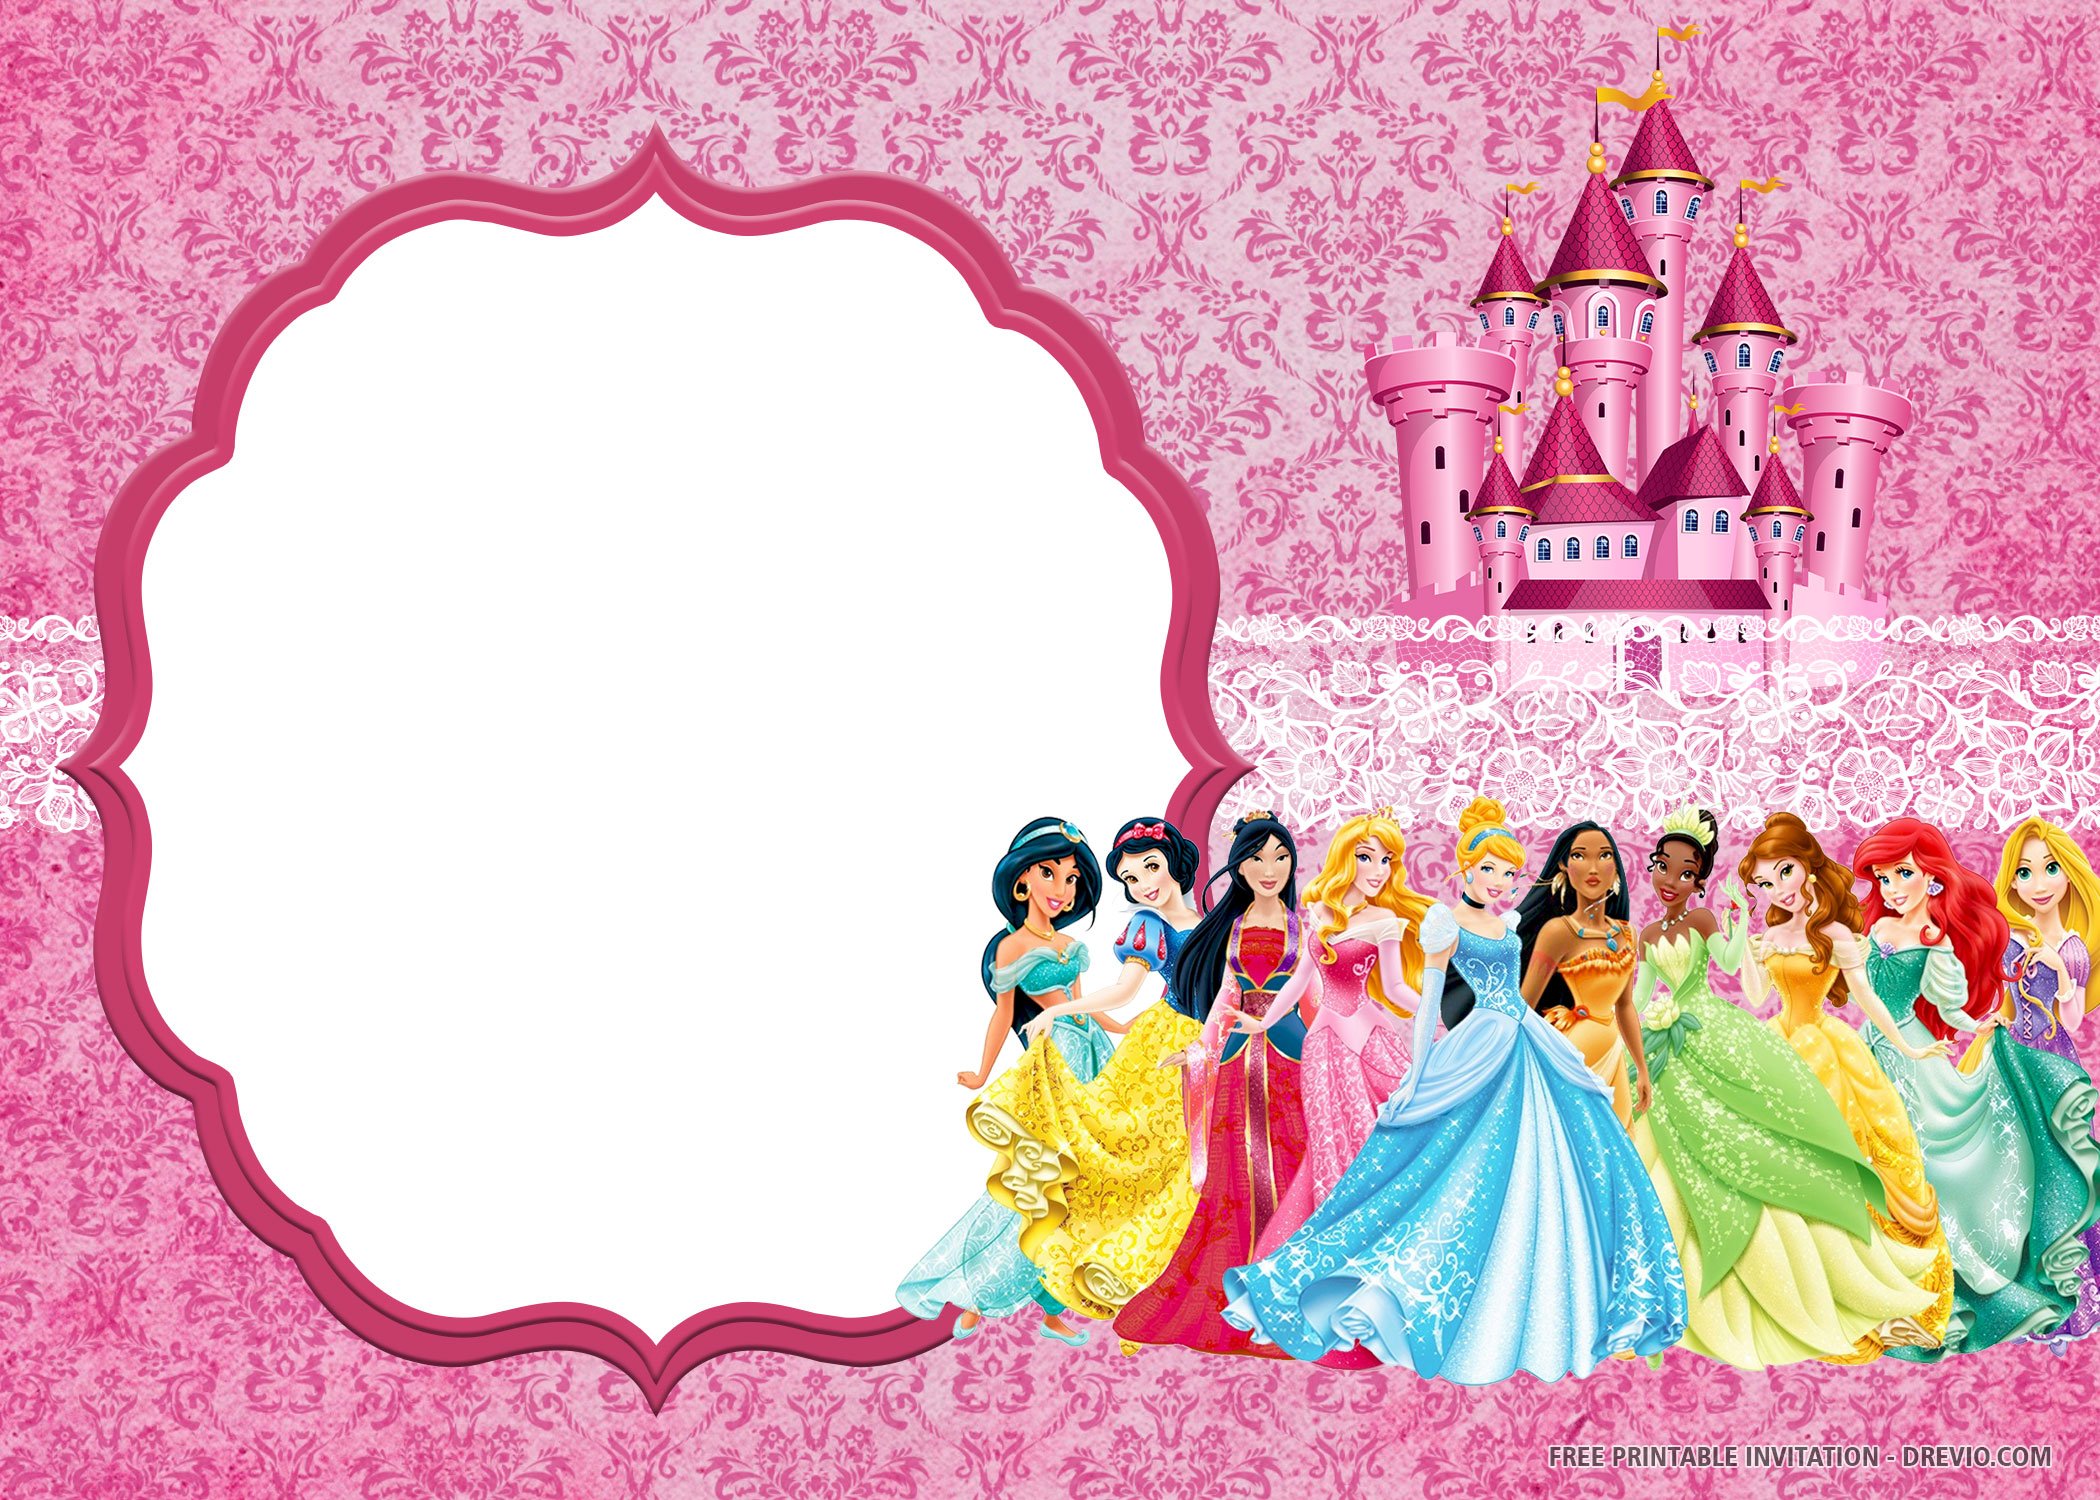 Disney Princess Party Invitations Free Printable - FREE PRINTABLE TEMPLATES